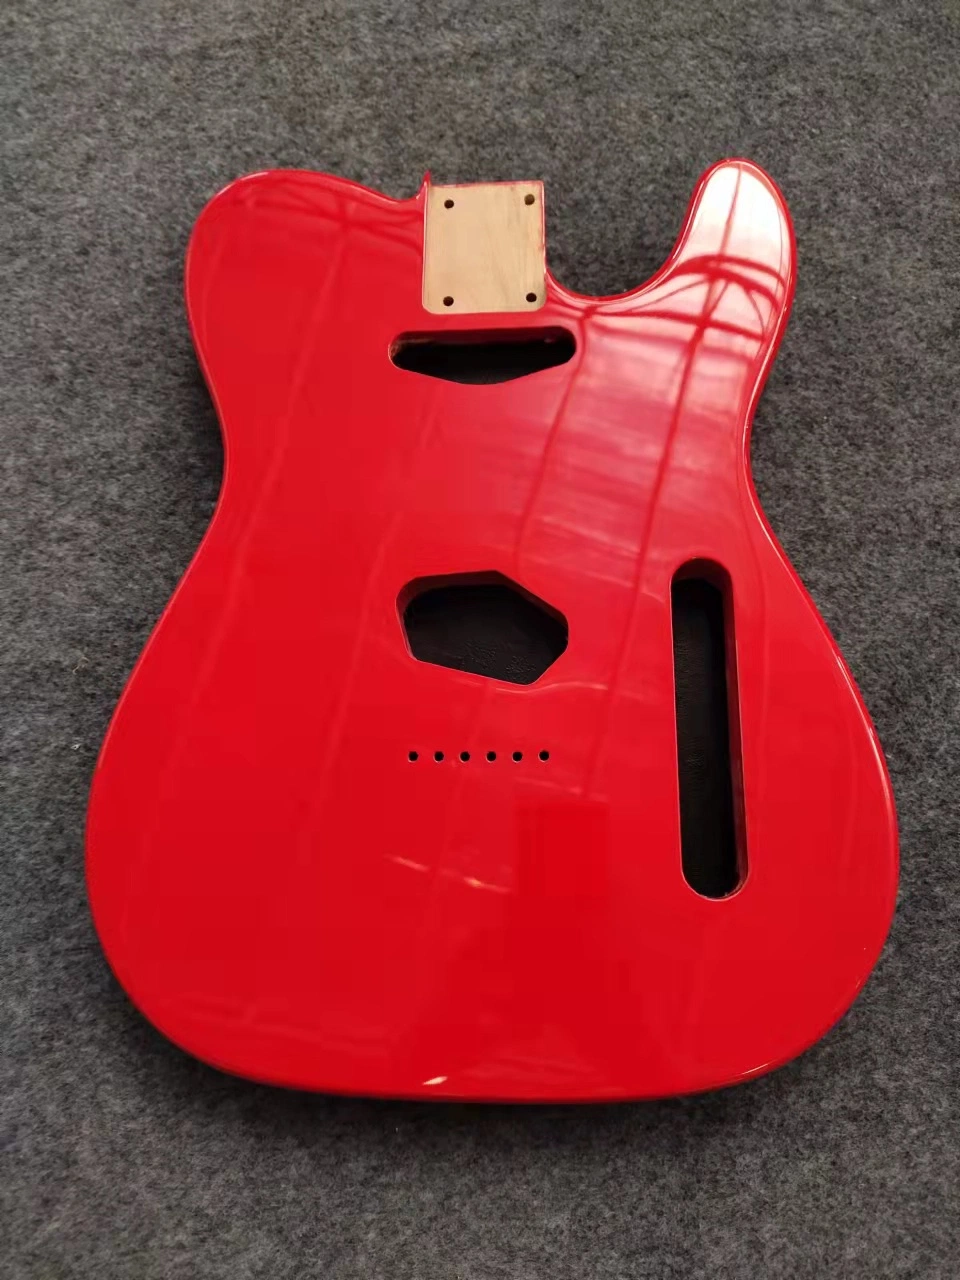 Smiger Fiesta Red Tele Alder Wood Electric Guitar Body